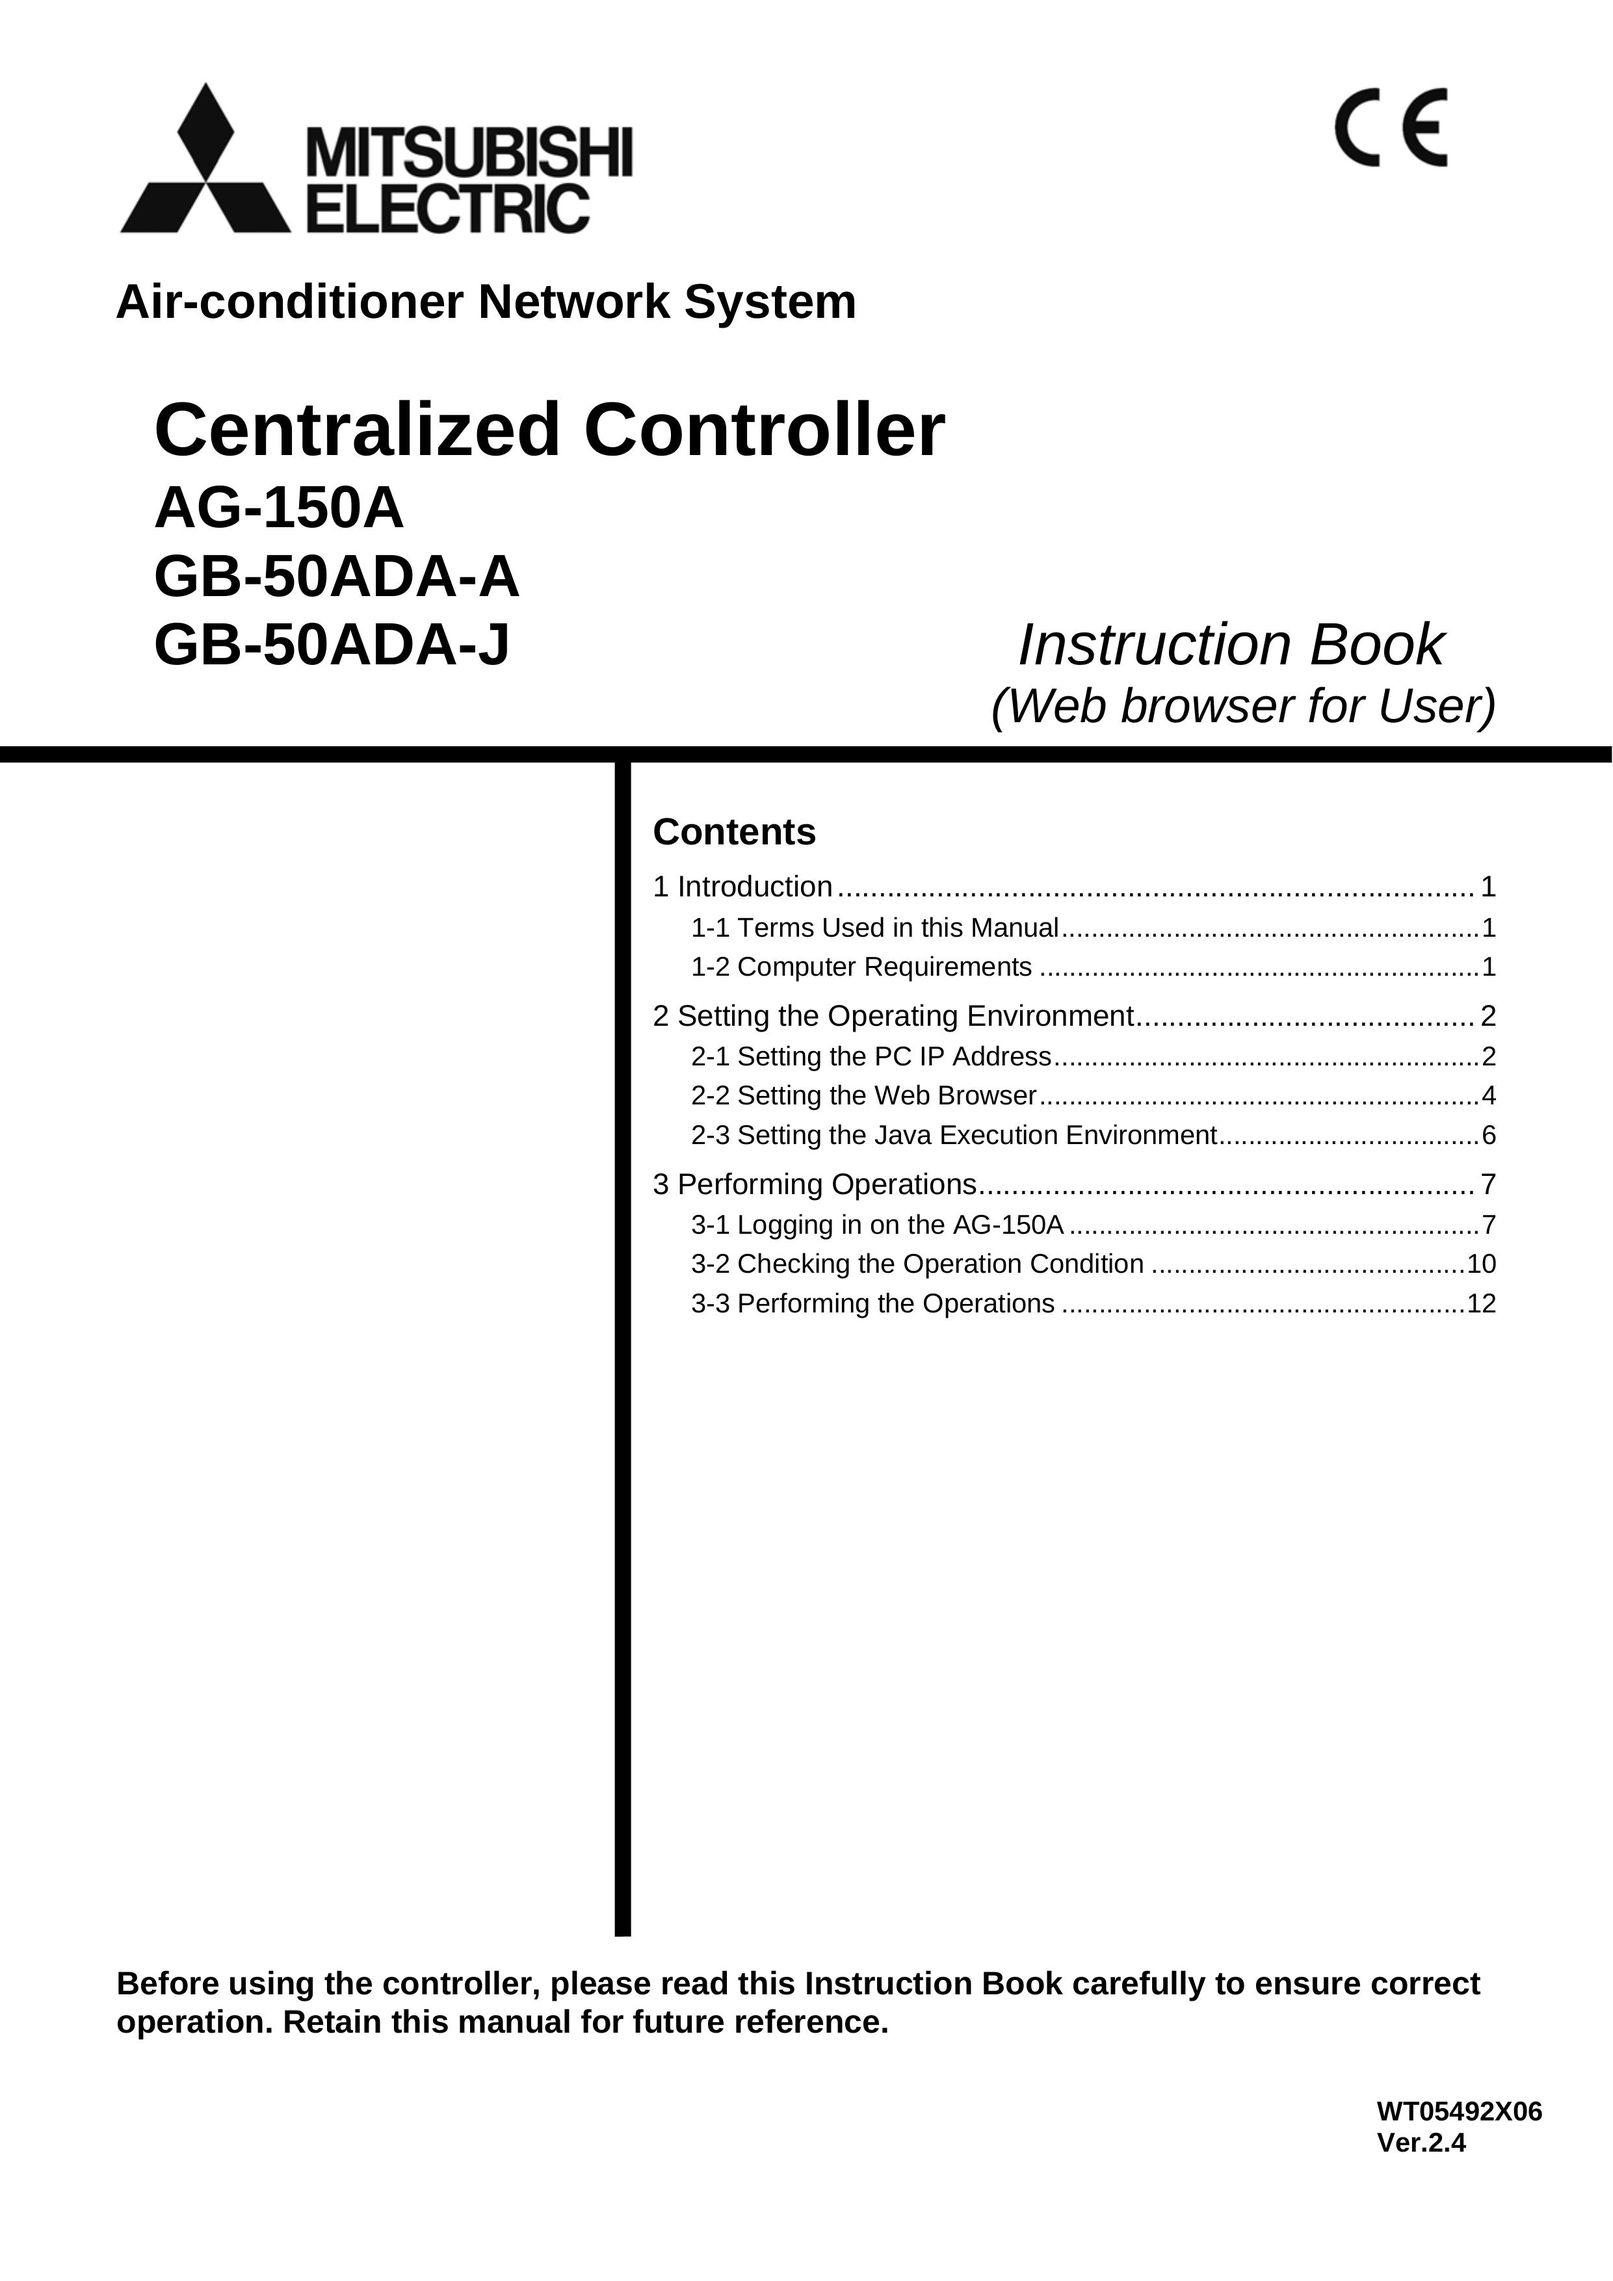 Mitsubishi Electronics GB-50ADA-J Air Conditioner User Manual